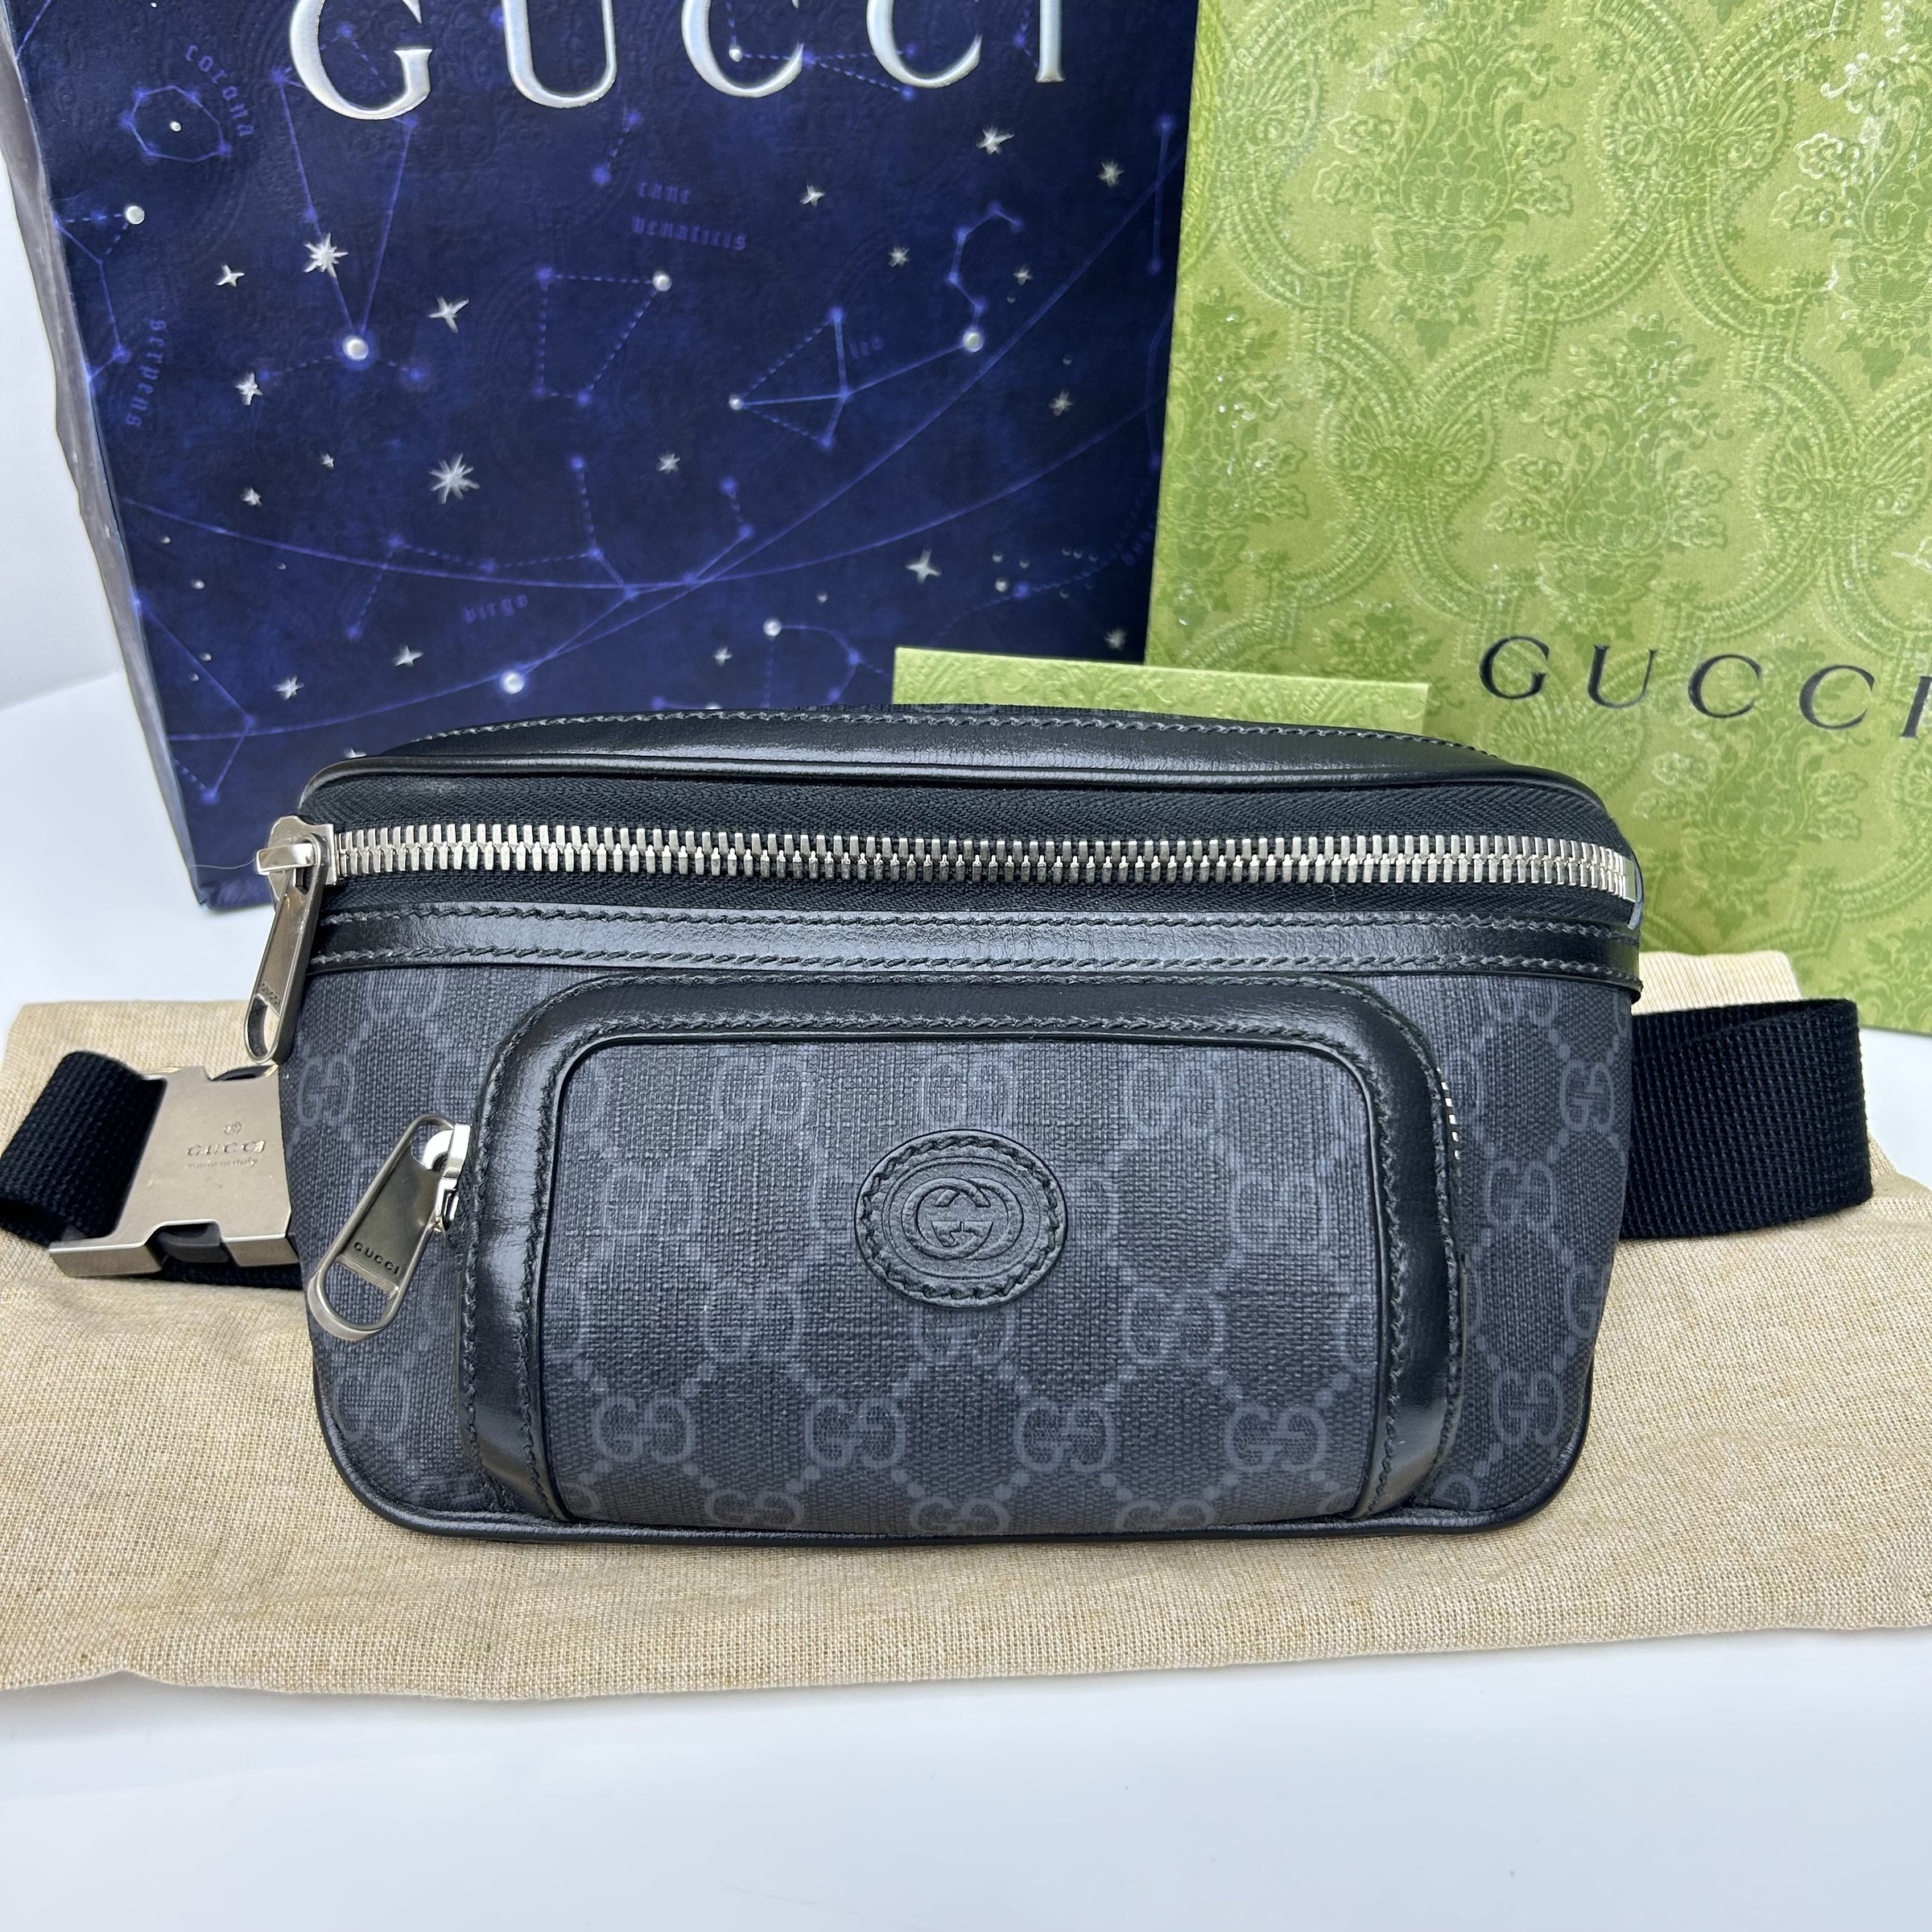 Gucci GG Supreme Body Bag Waist Pouch Hip Leather Beige Black 523309